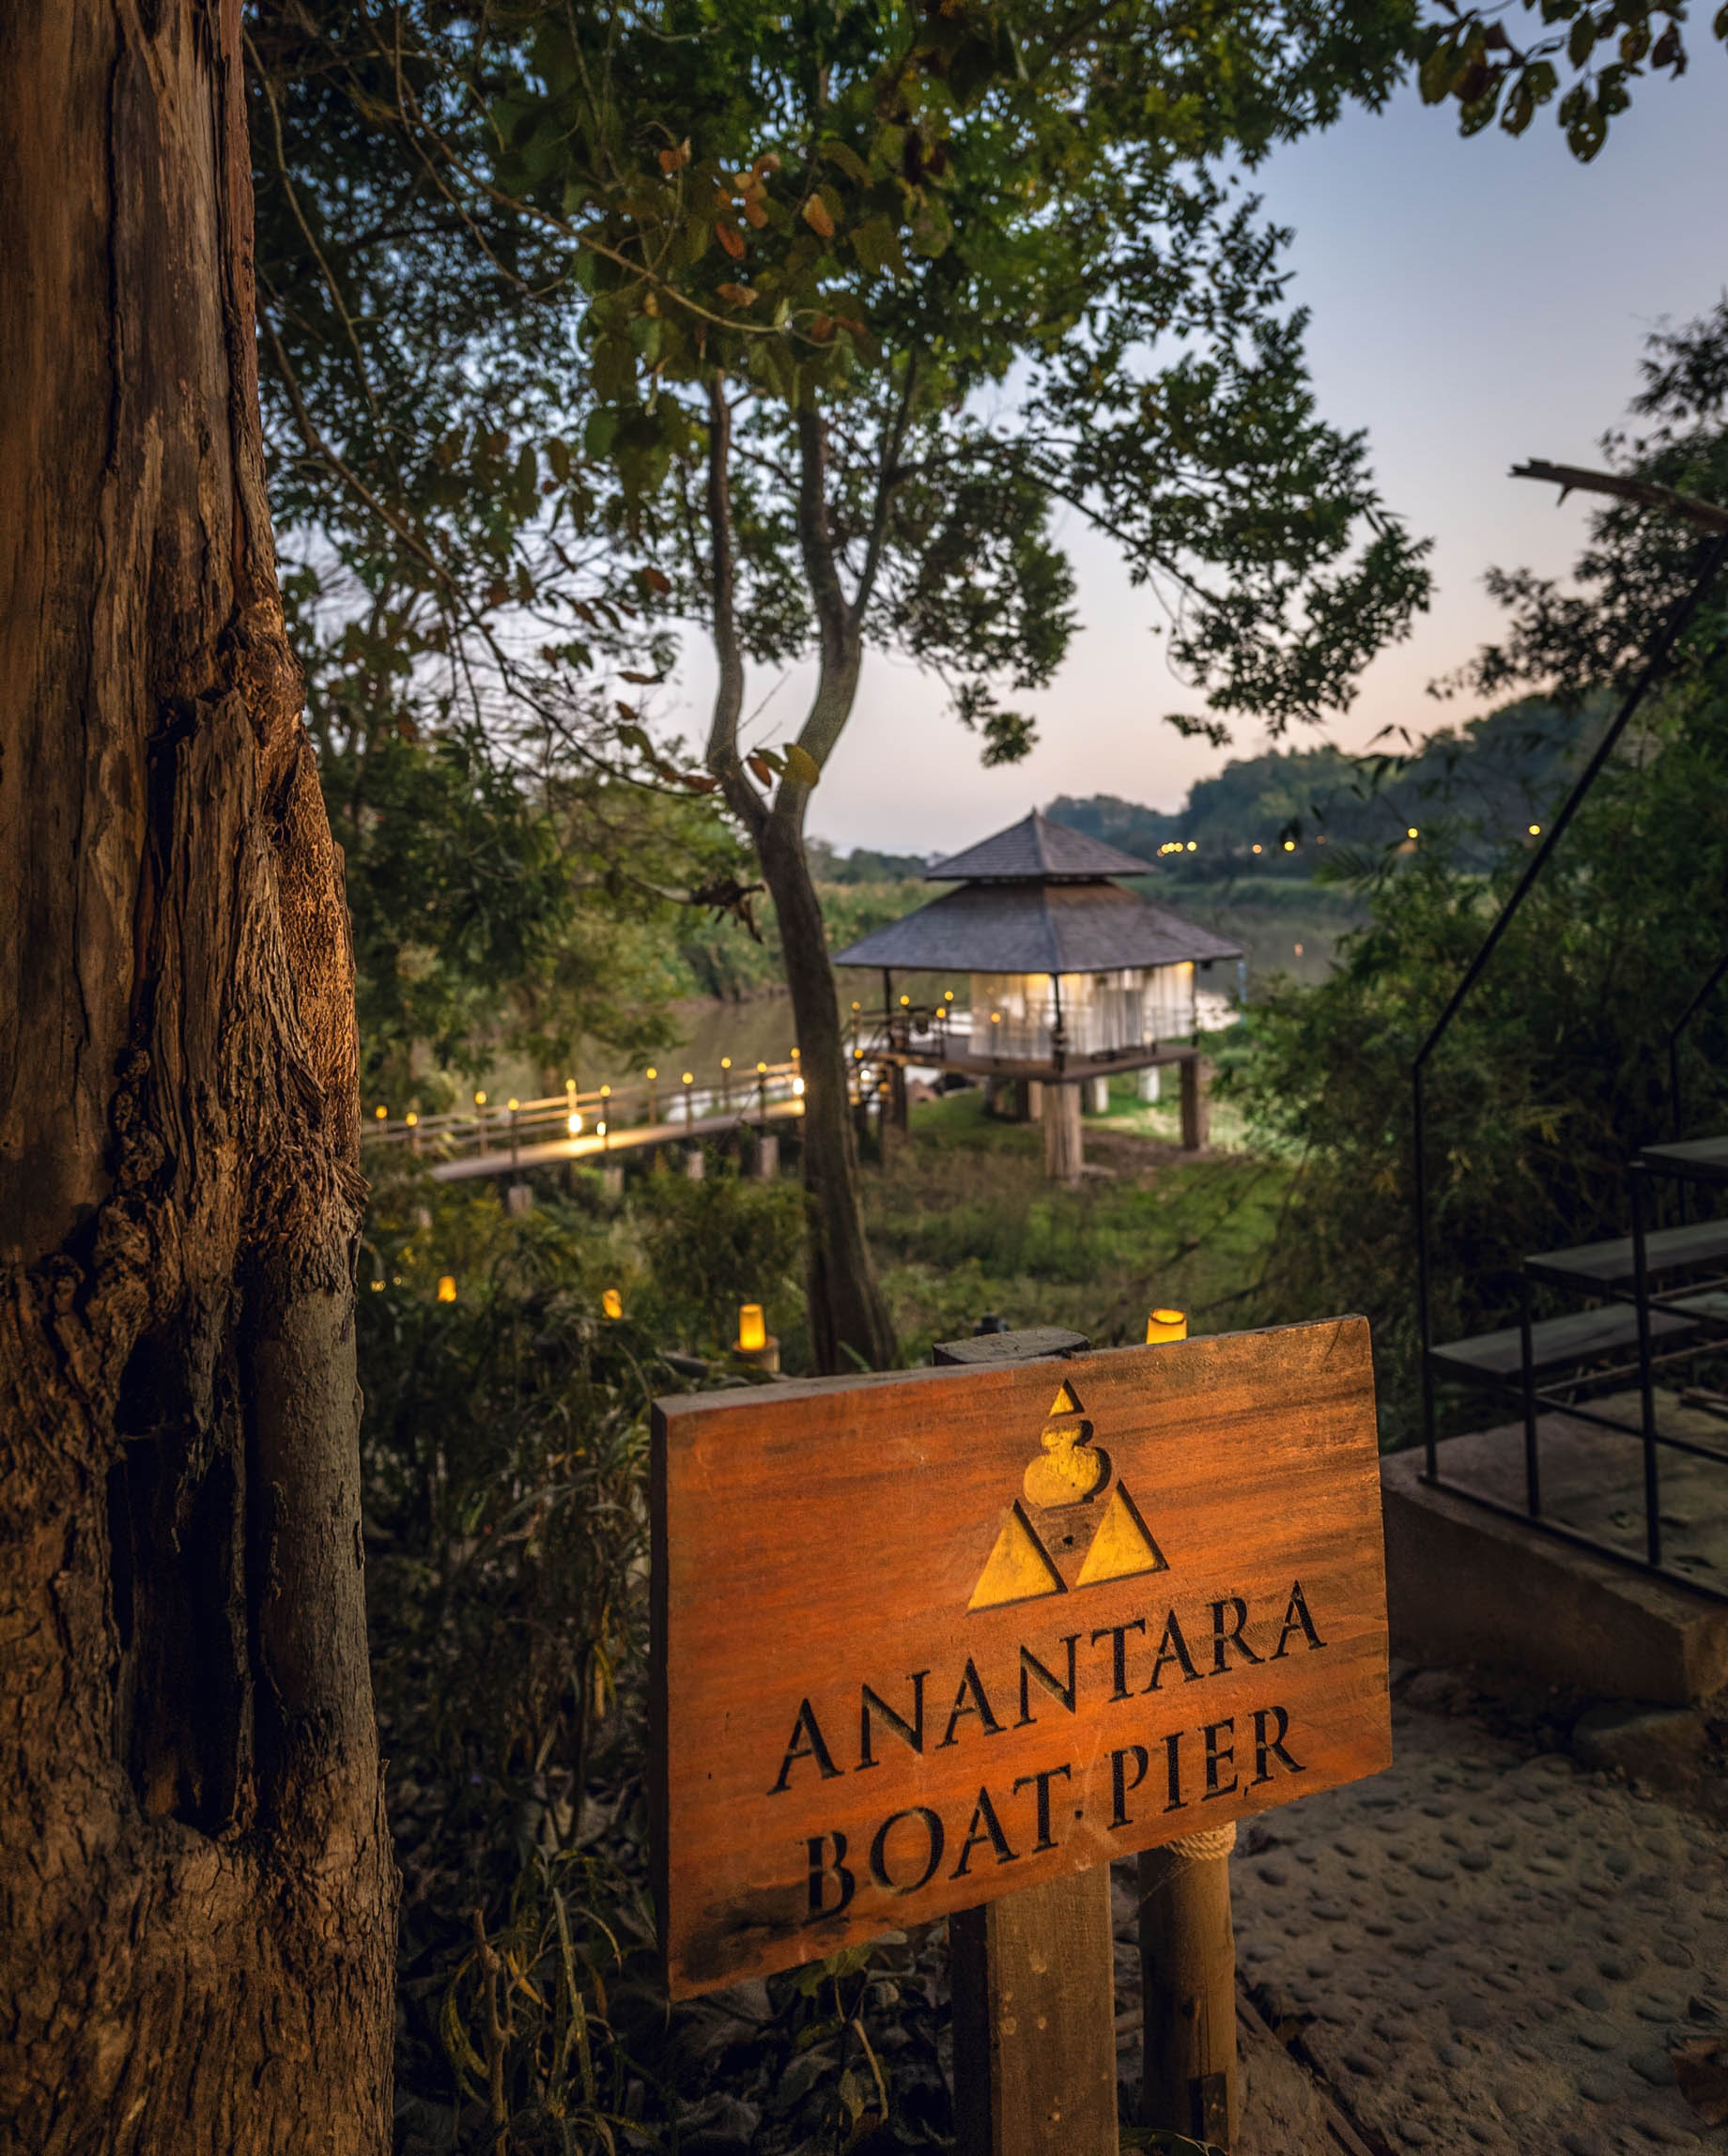 Anantara Golden Triangle Elephant Camp & Resort – Chiang Rai, Thailand – Boat Pier